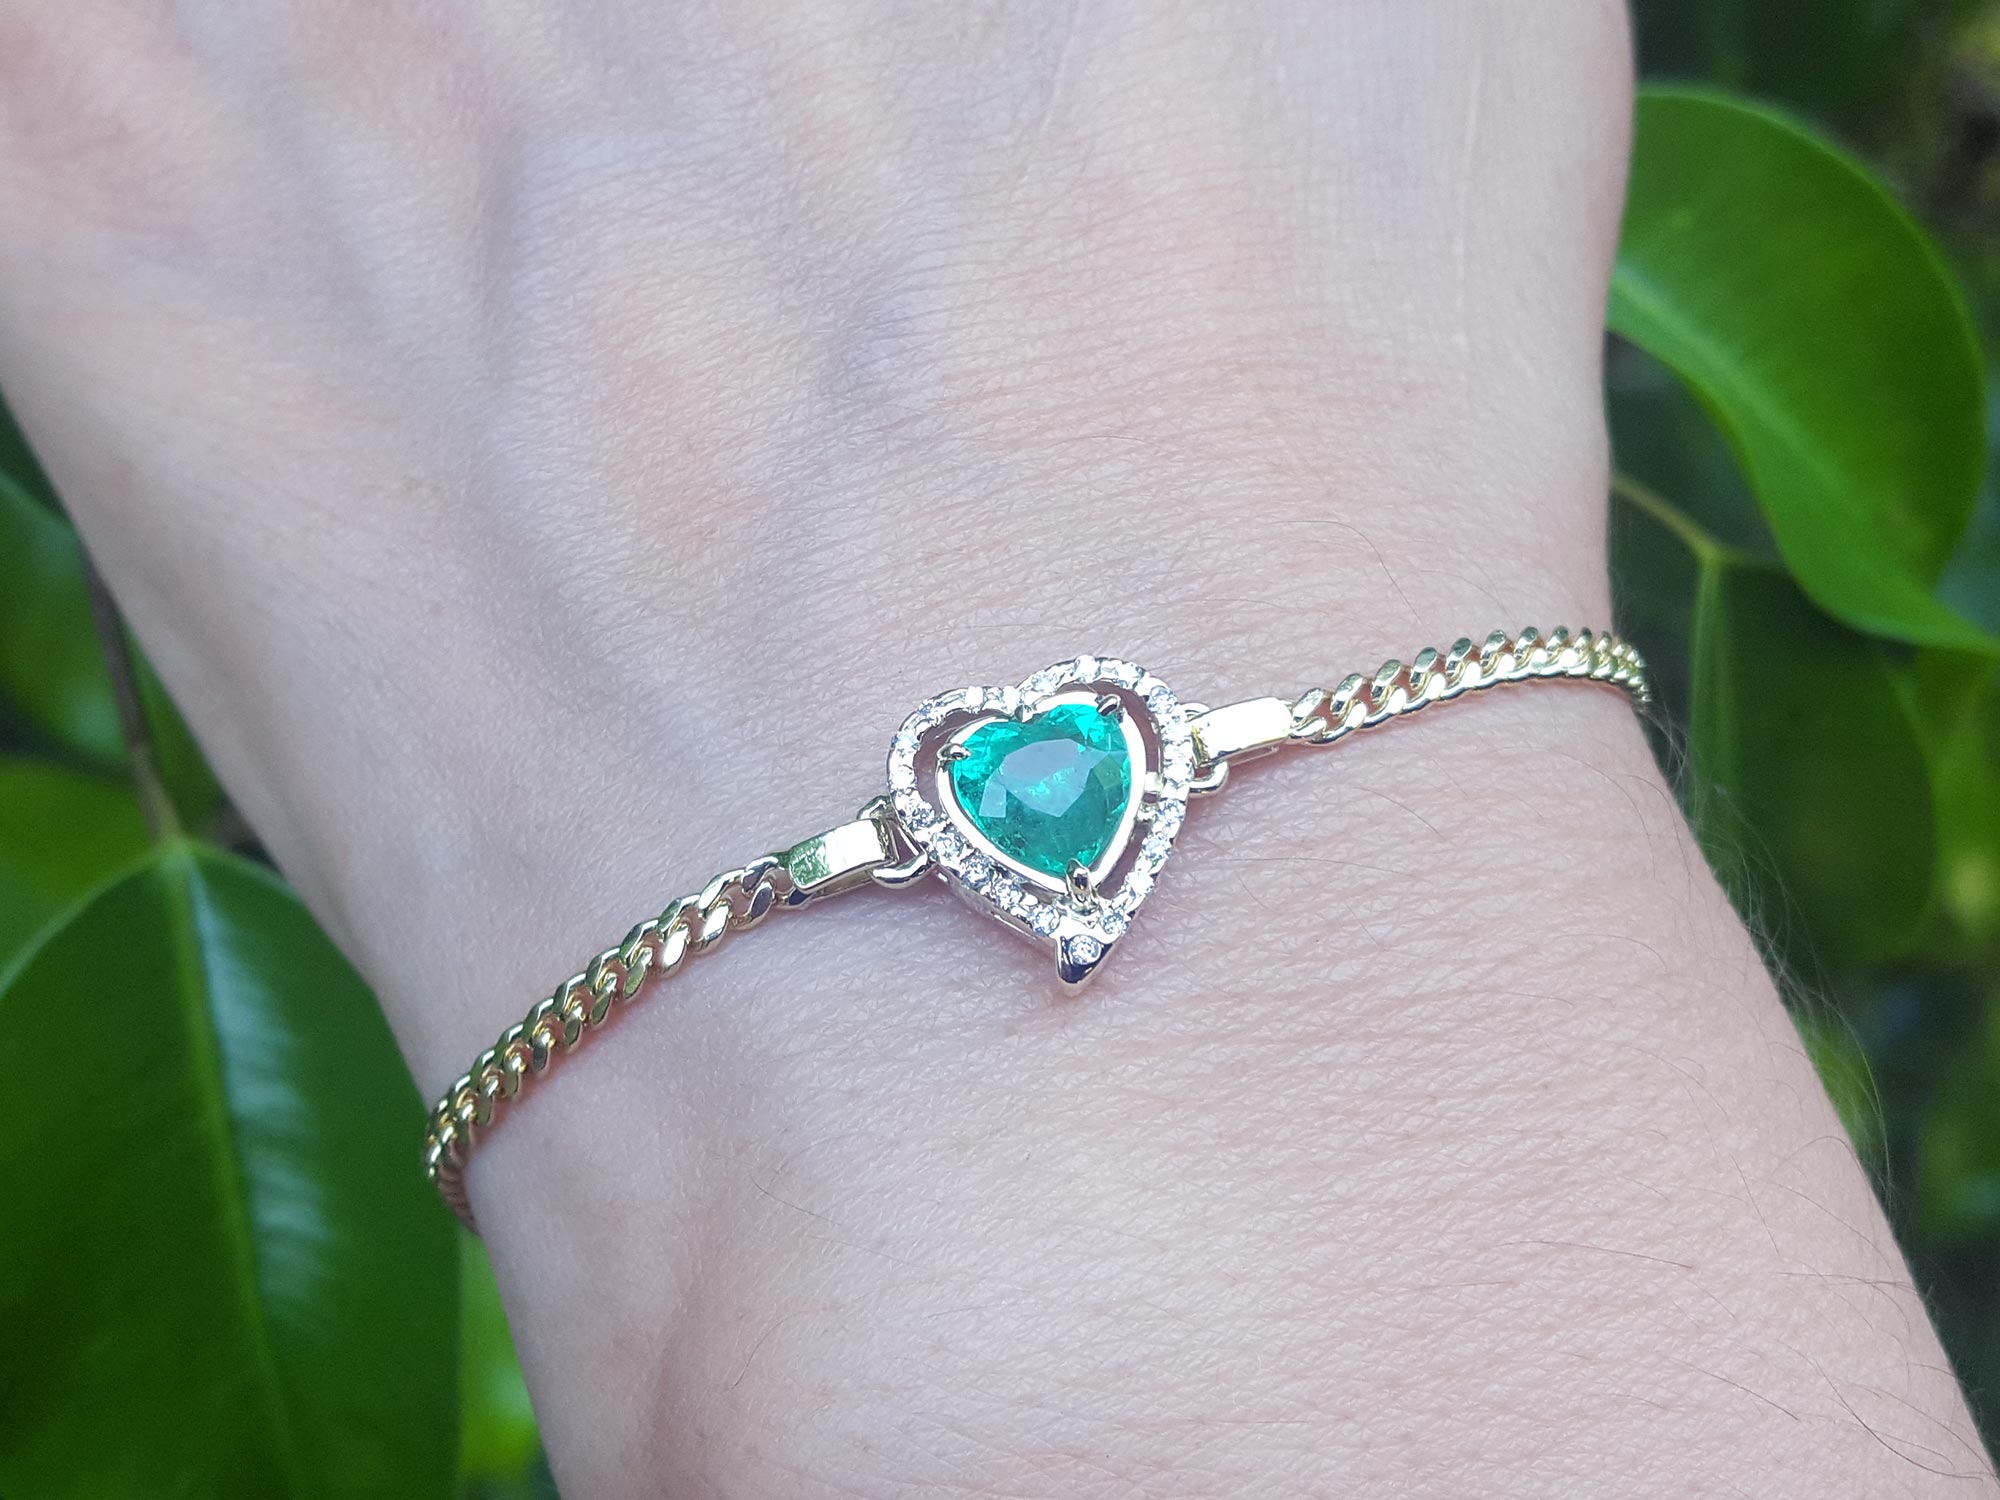 Real emerald bracelets